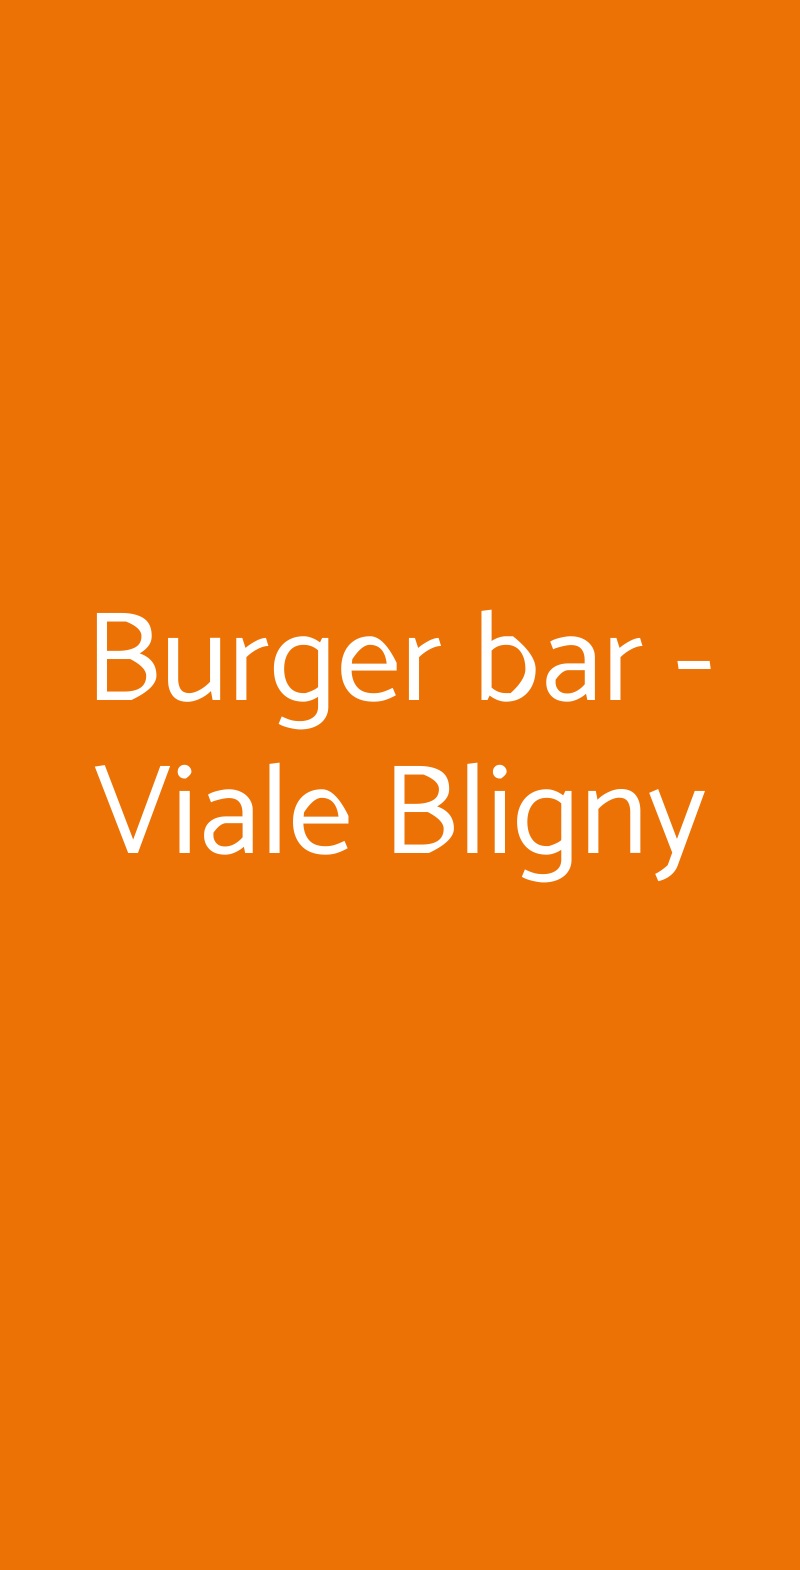 Burger bar - Viale Bligny Milano menù 1 pagina